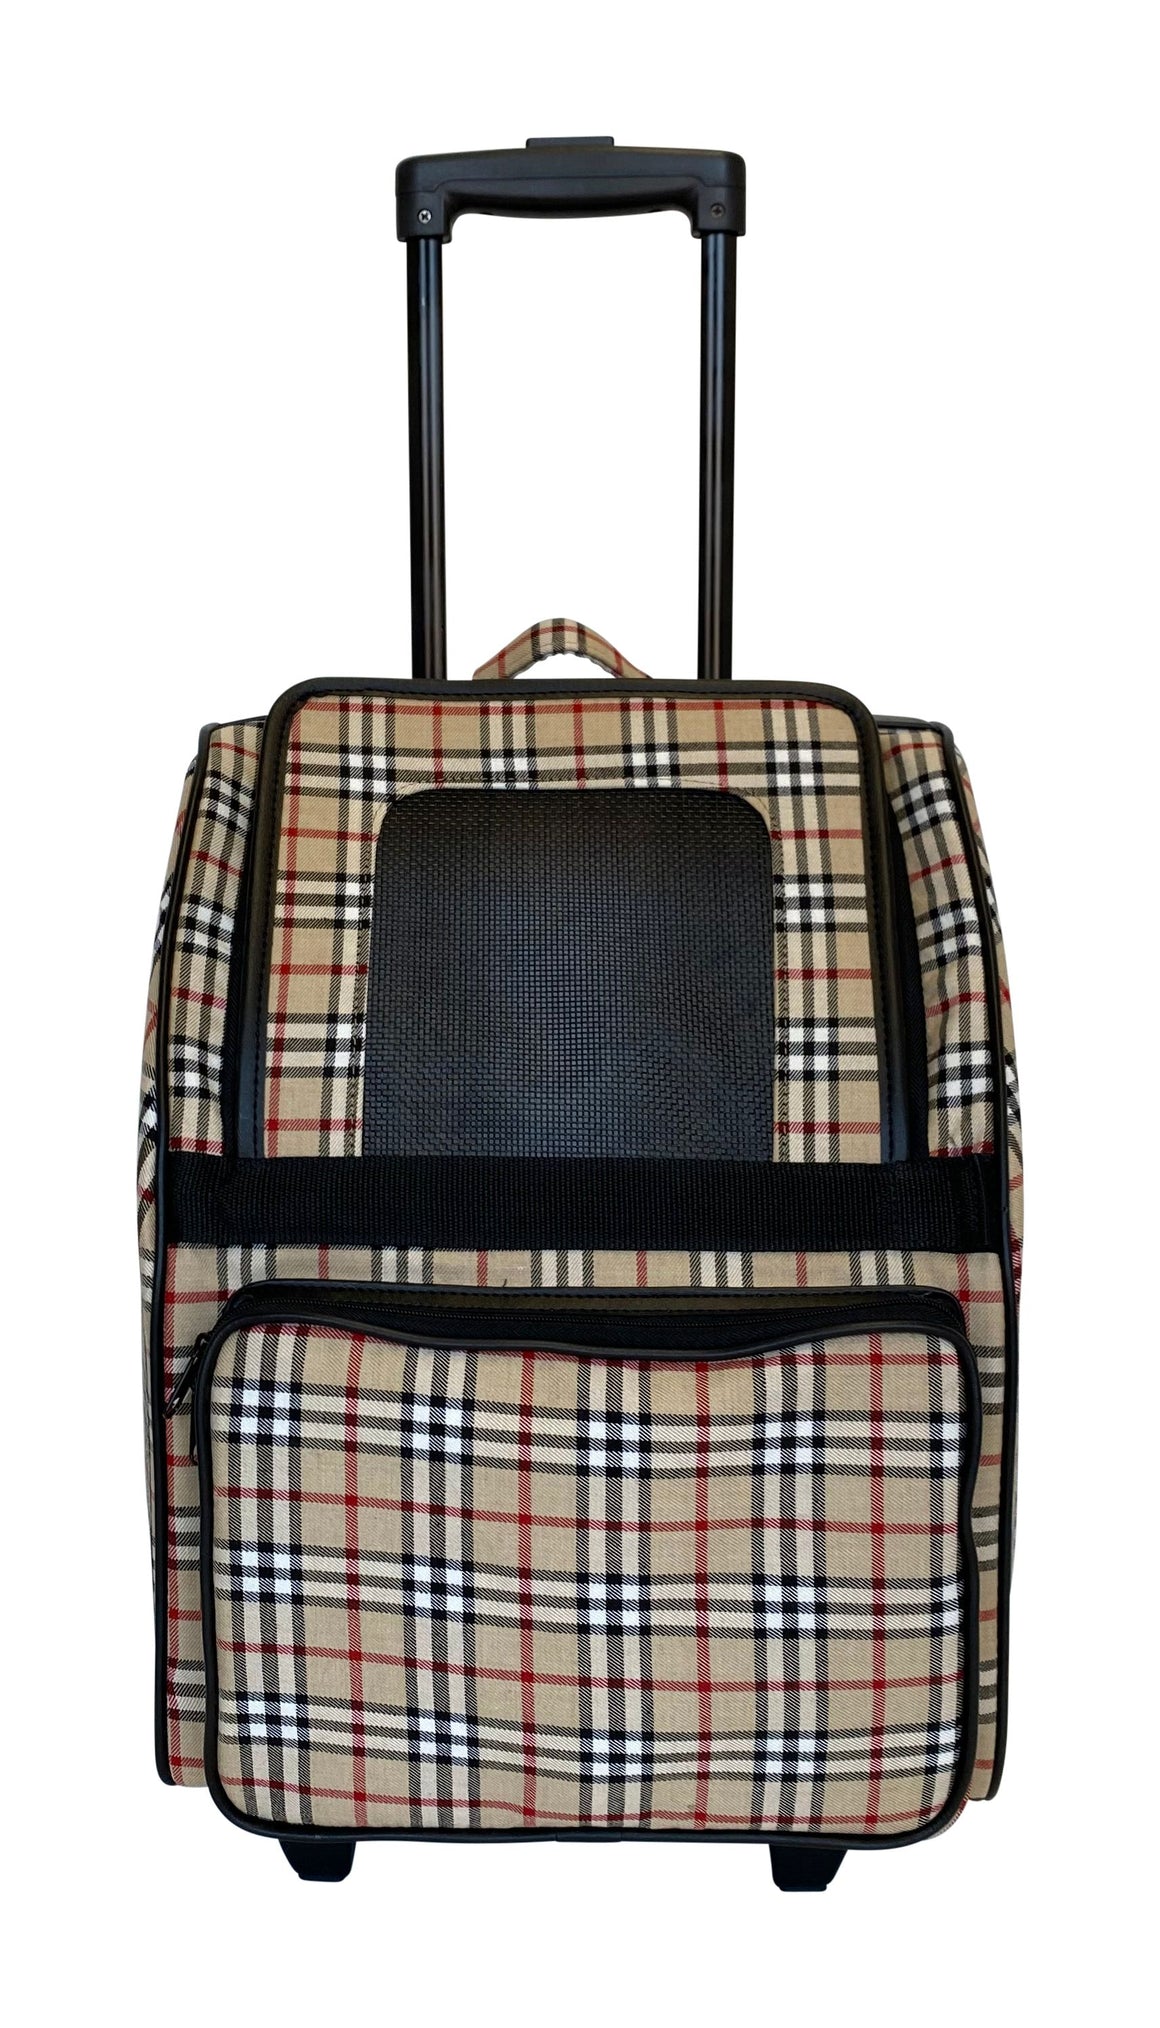 Petote Traveler Bag: Rio Couture Collection - Furberry